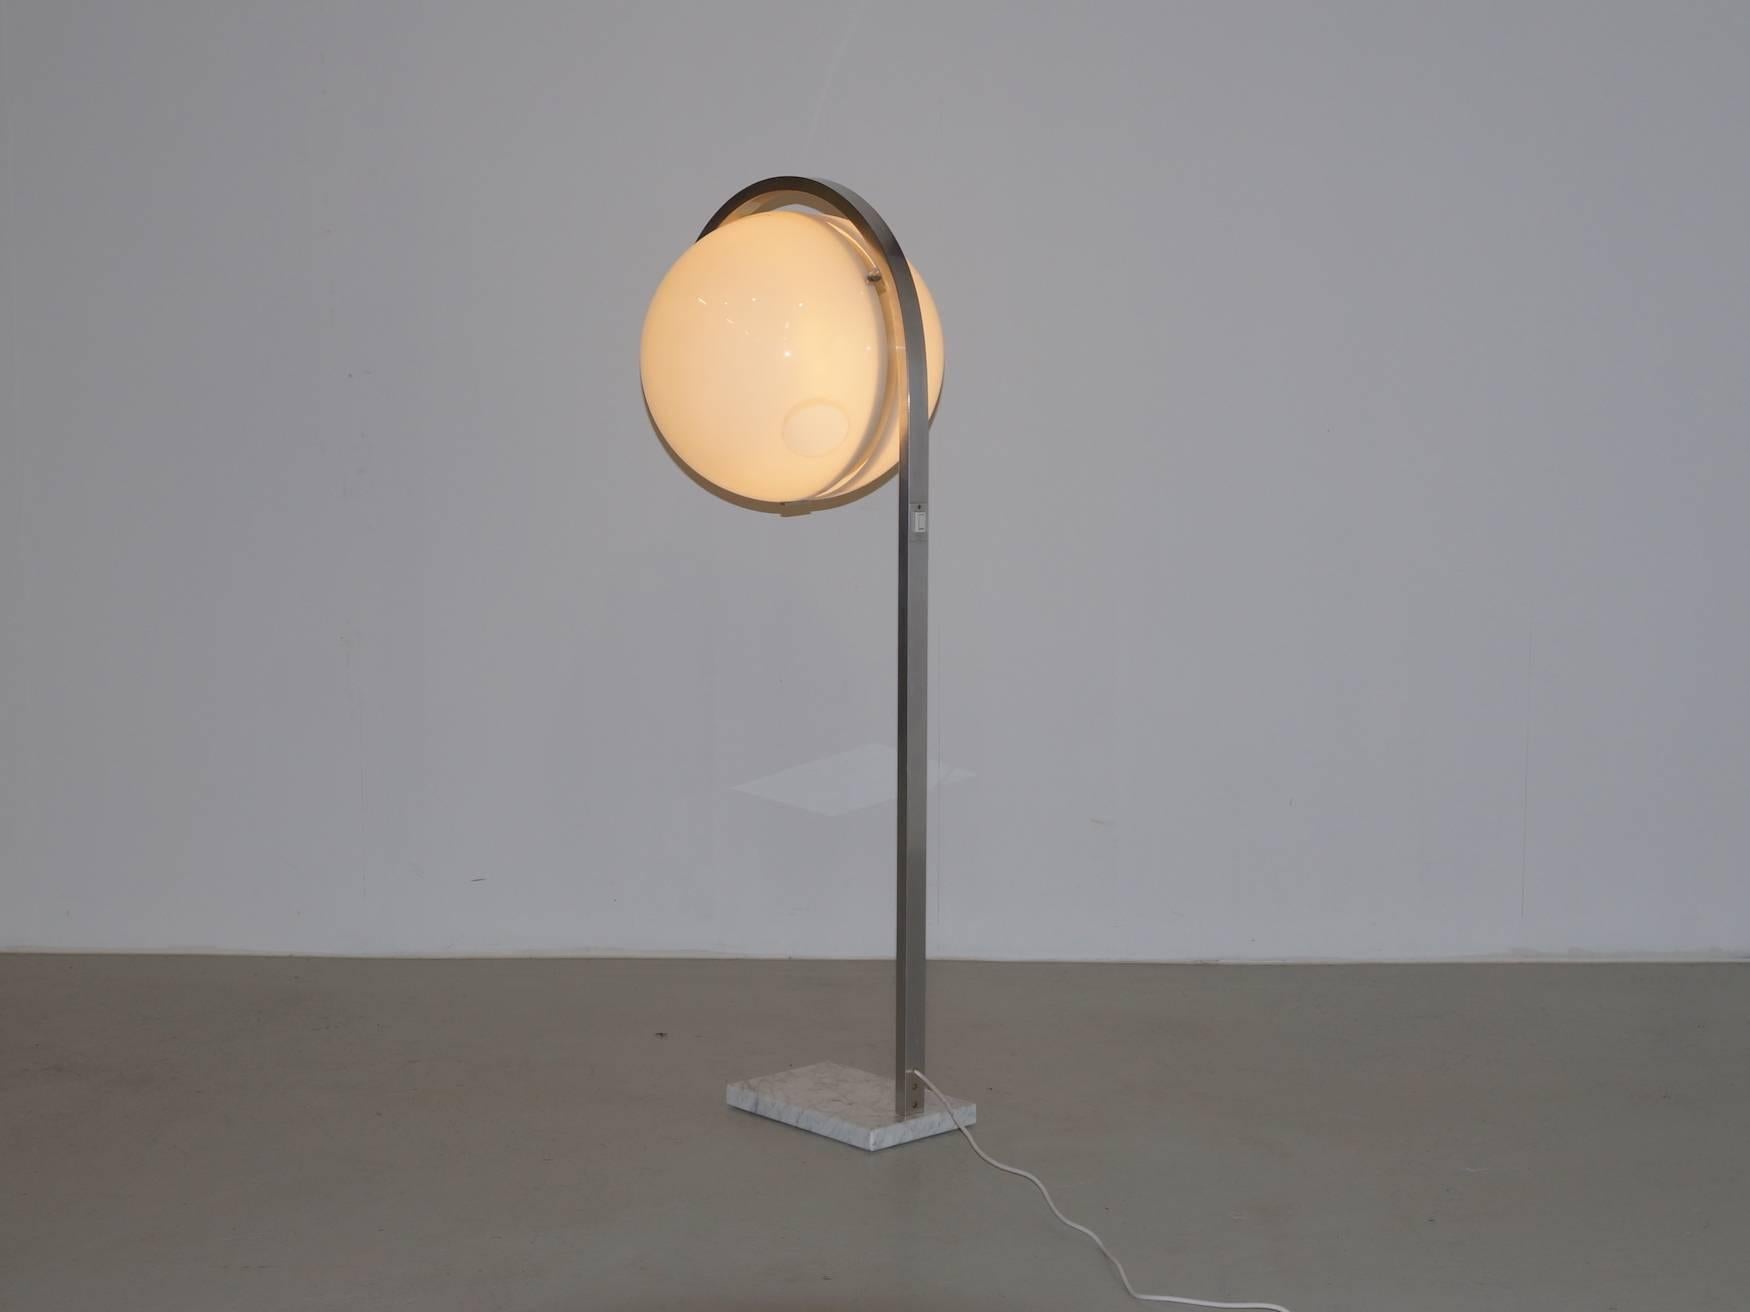 Aluminum Acrylic Globe Floor Lamp on Carrera Marble Base, Italian, 1960s For Sale